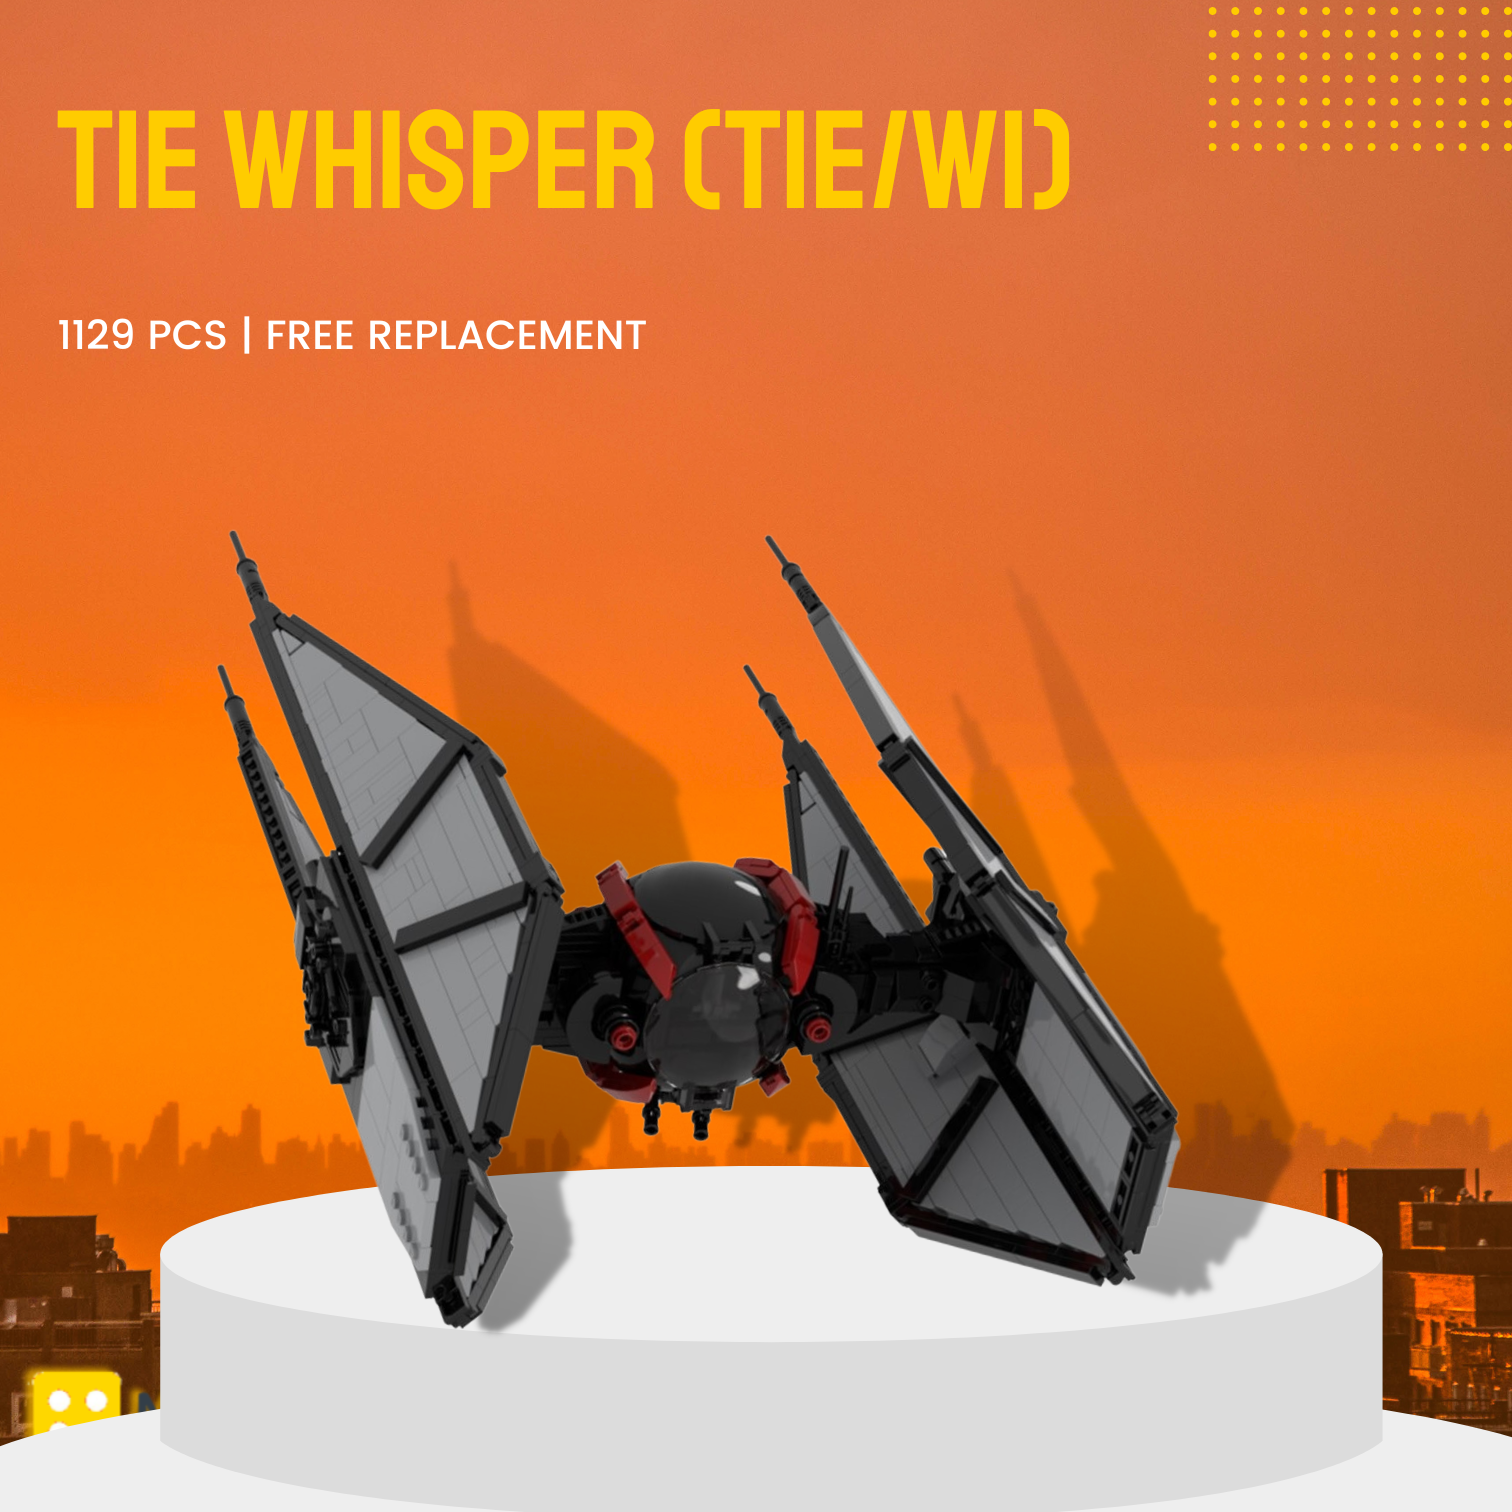 Star Wars MOC-112047 TIE Whisper (TIE/wi) MOCBRICKLAND